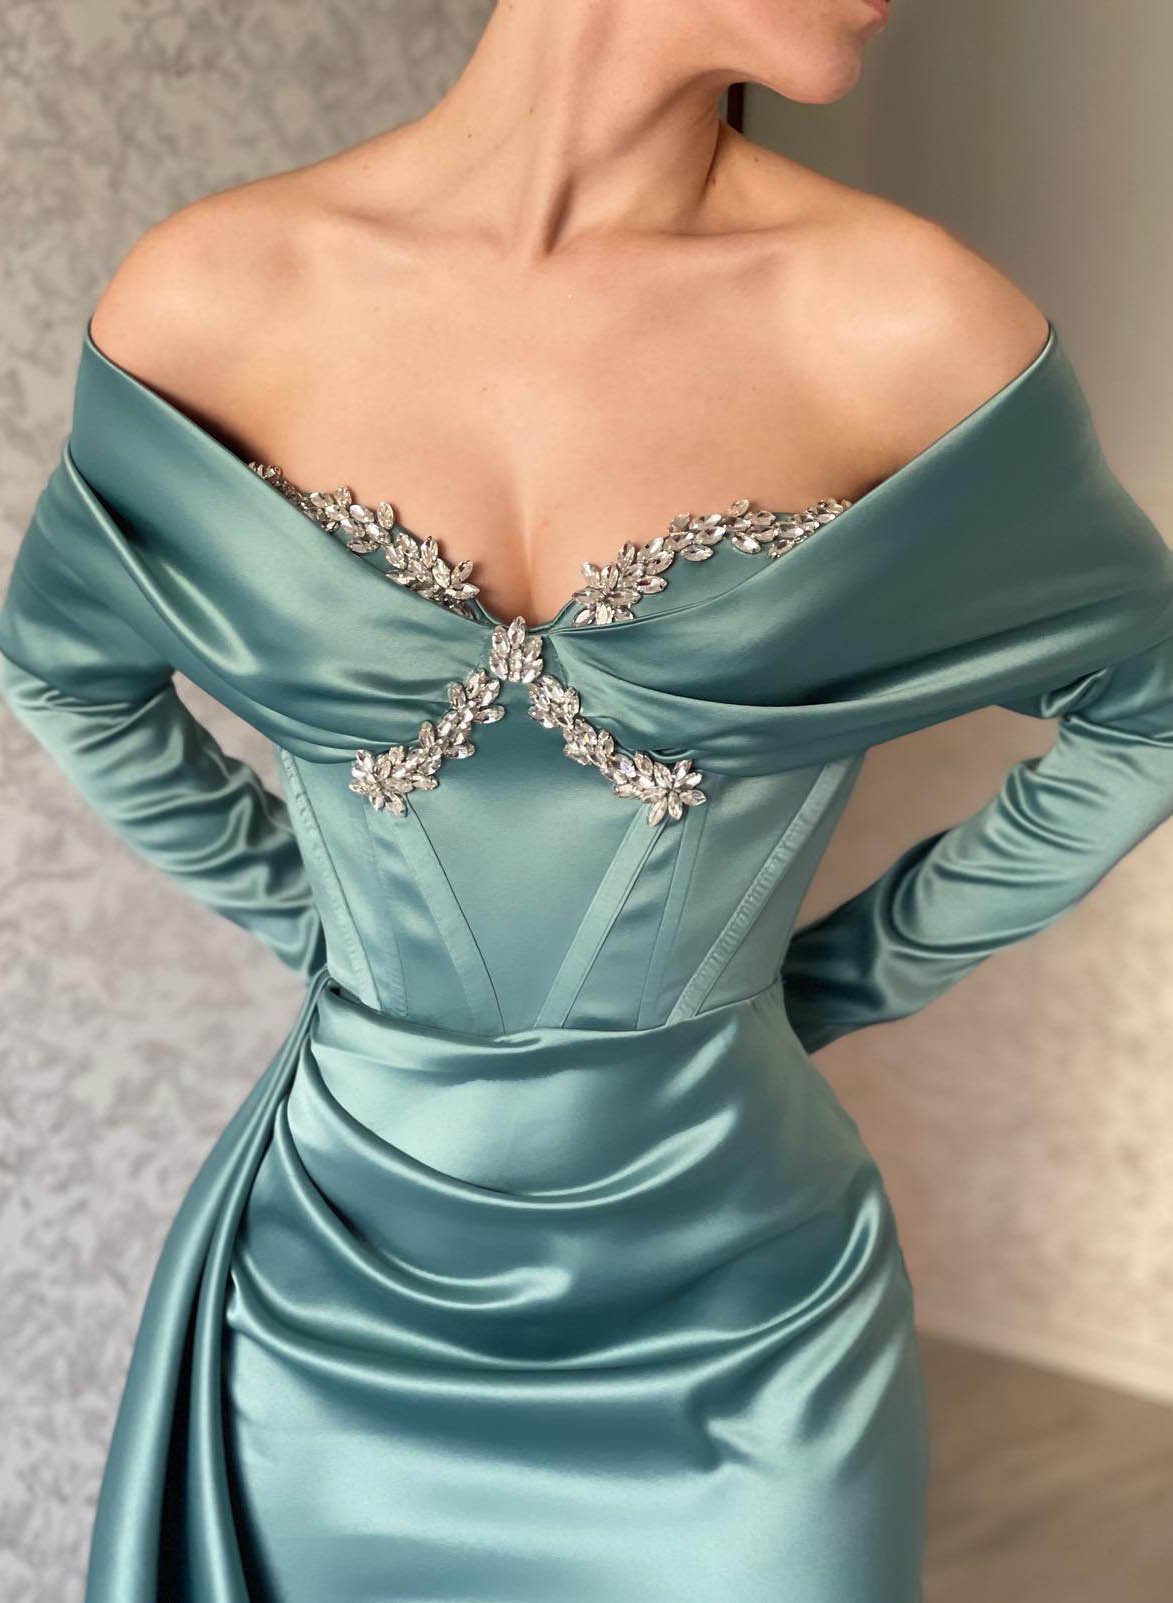 Long Sleeves Off-The-Shoulder Trumpet/Mermaid Prom Dresses